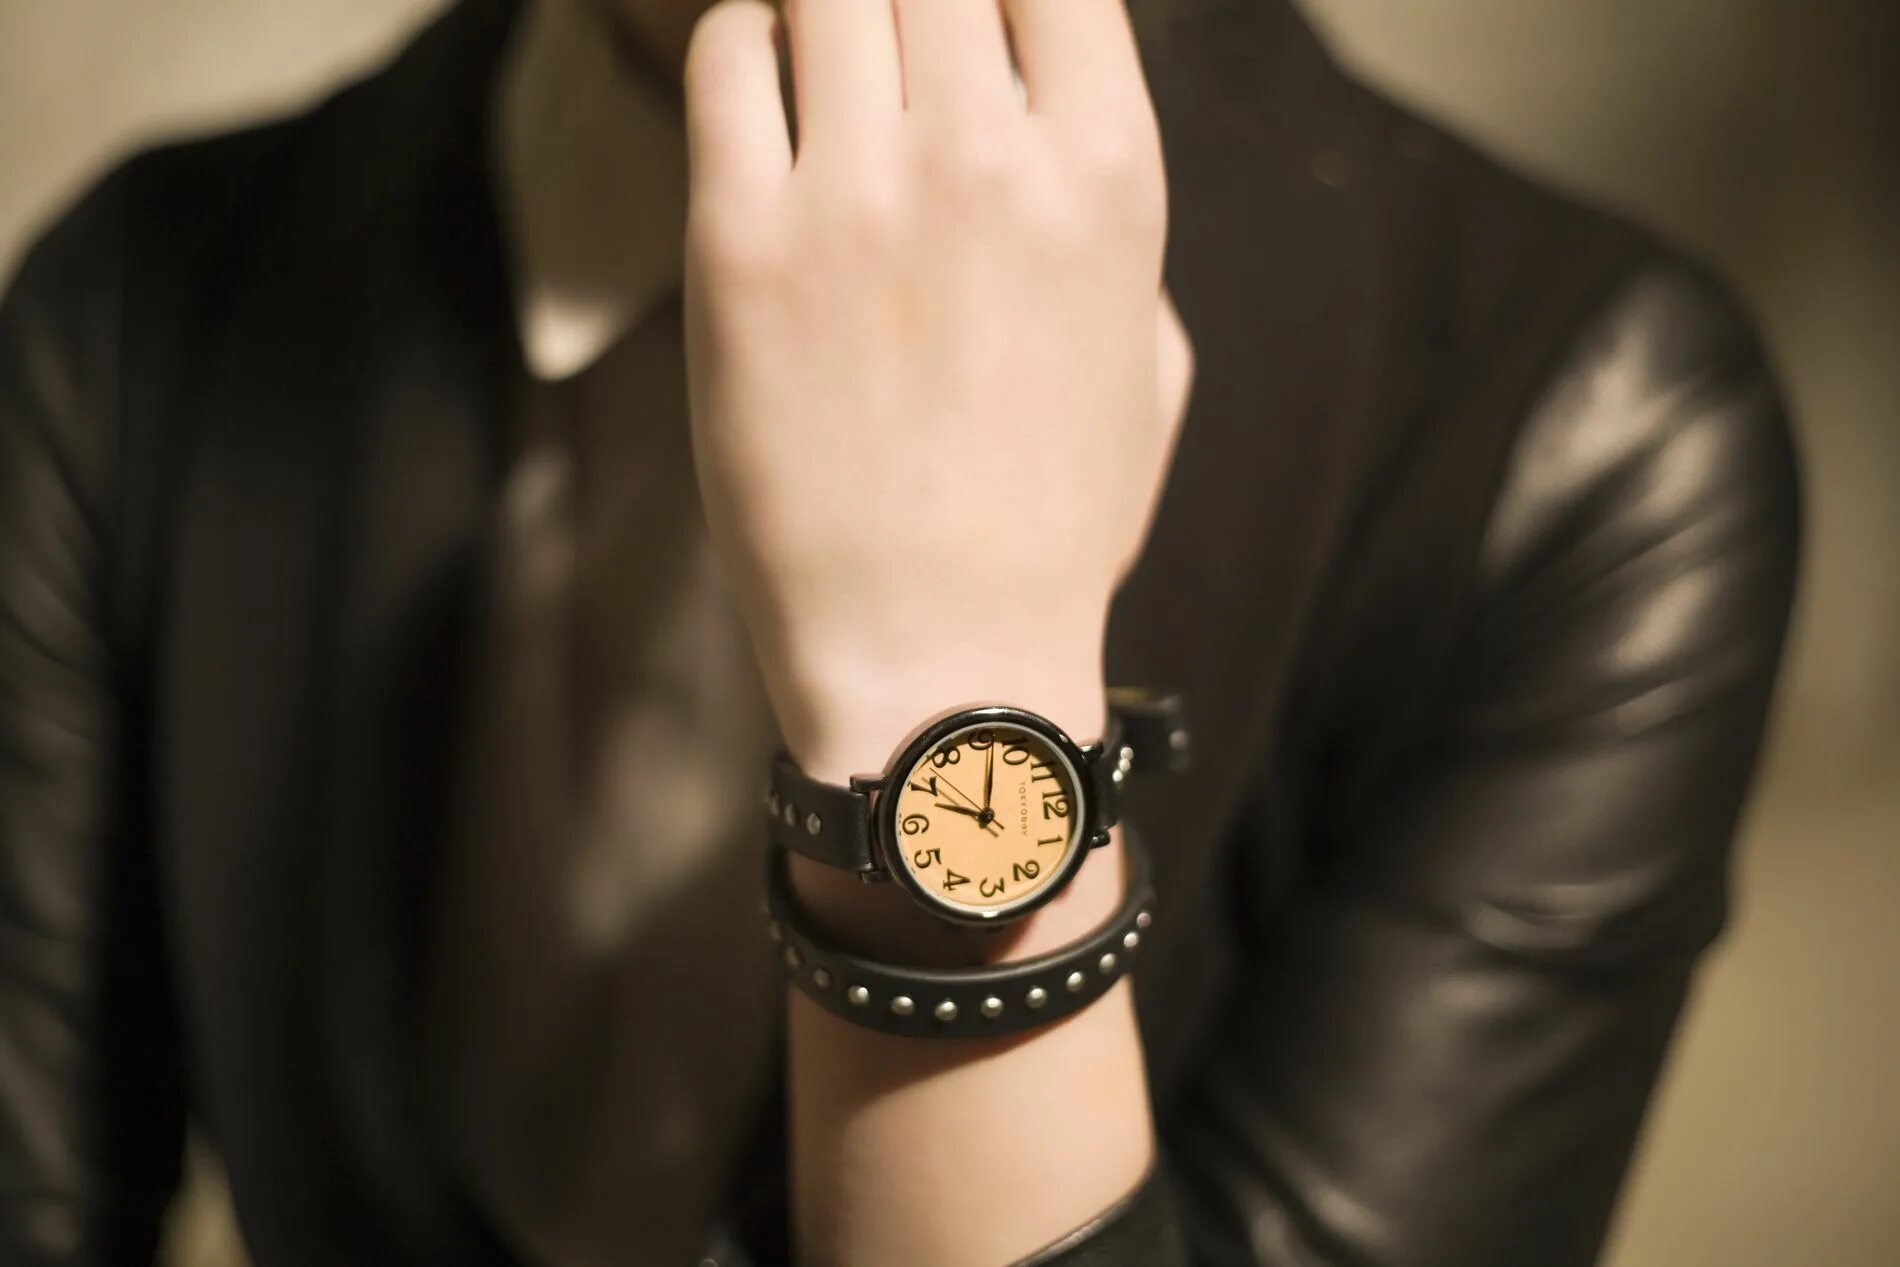 Картинки руки часы. Наручные часы на руке. Стильные наручные часы. Мужские часы на руке. Современные часы на руку.